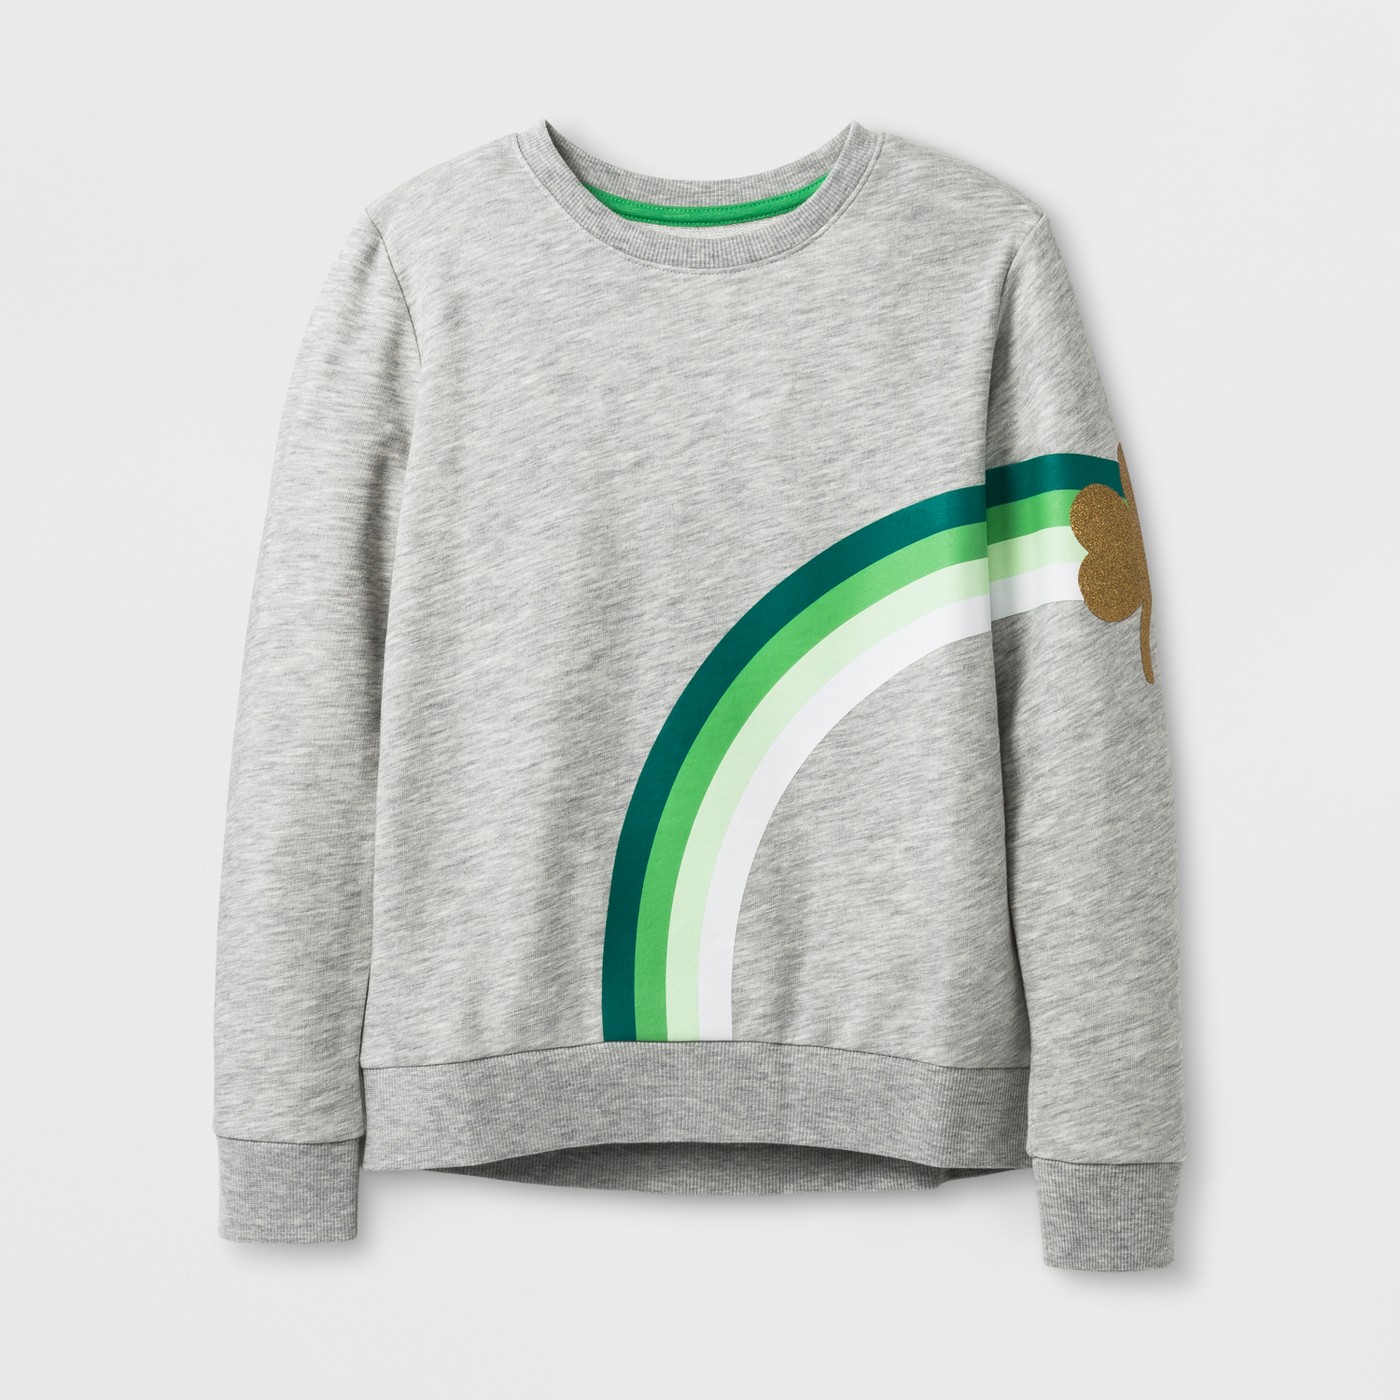 Girls St. Patrick's Day Sweatshirt $12.99-.jpeg